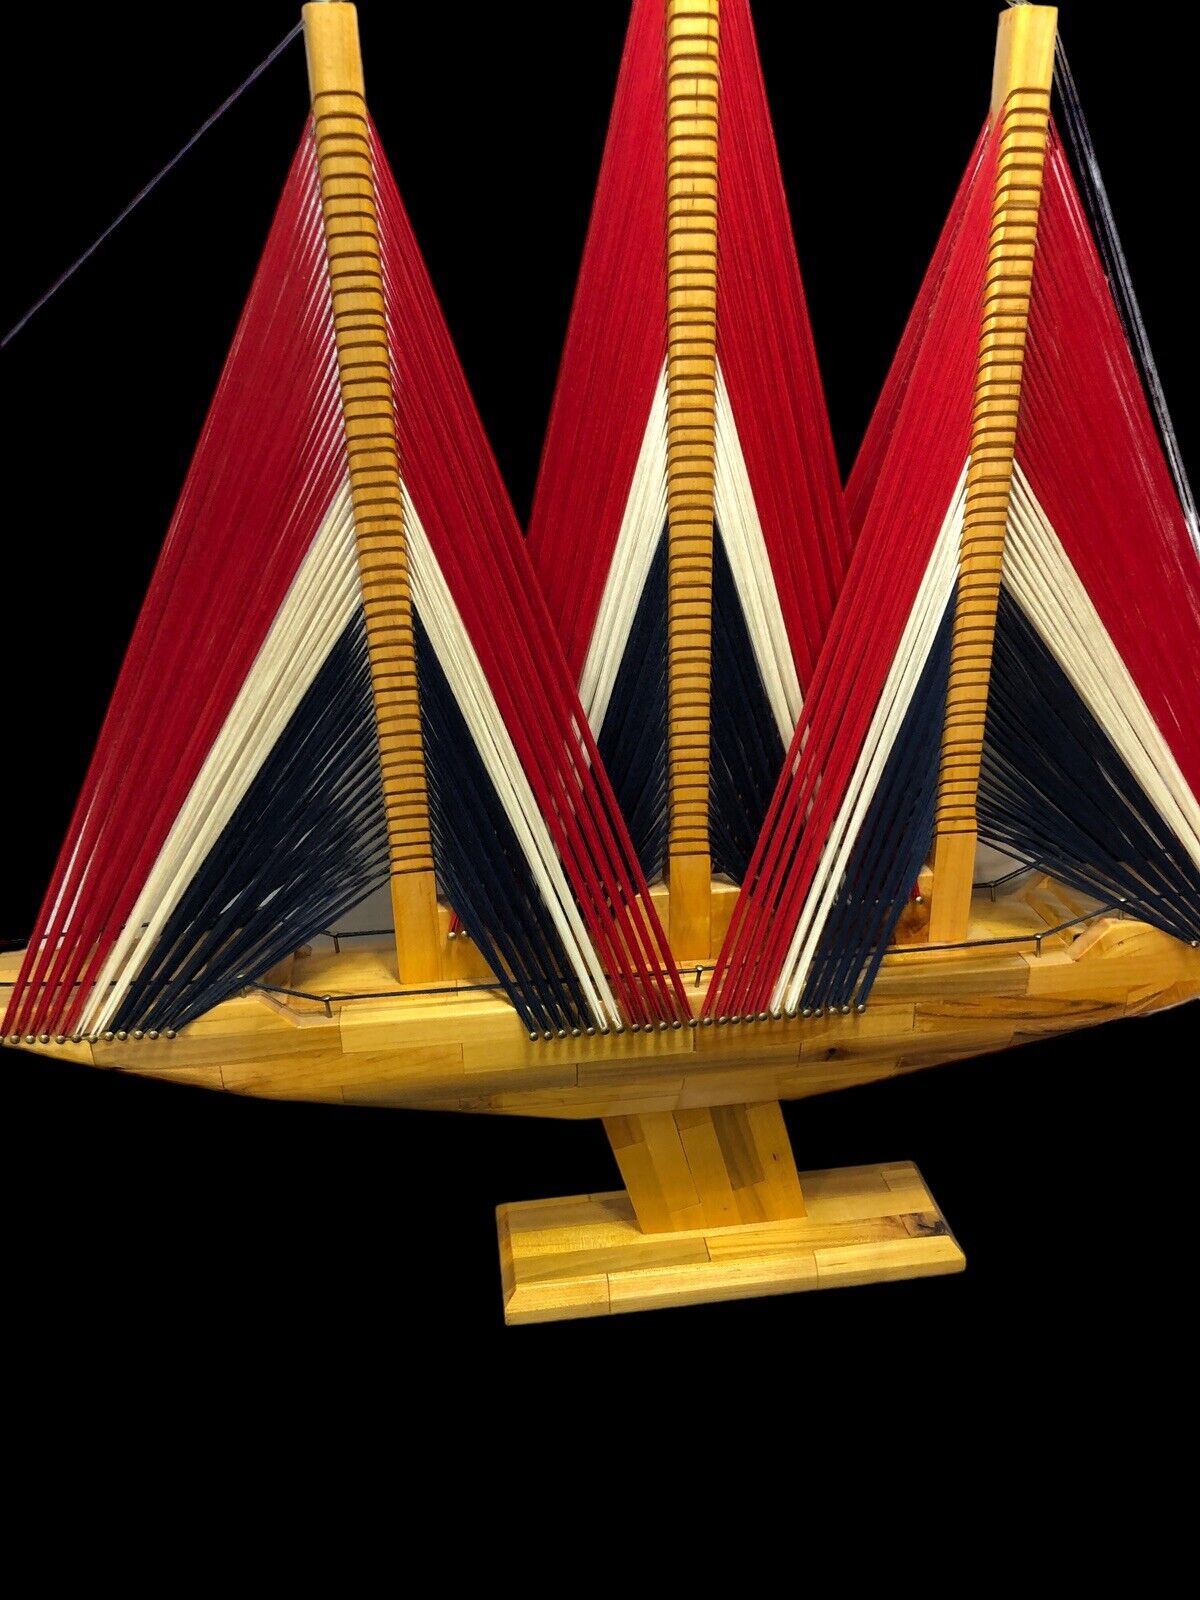 Wooden Sailing Vessel Sting Art 3D Unique 25” Tall X 33” Wide Wood Triple Mast